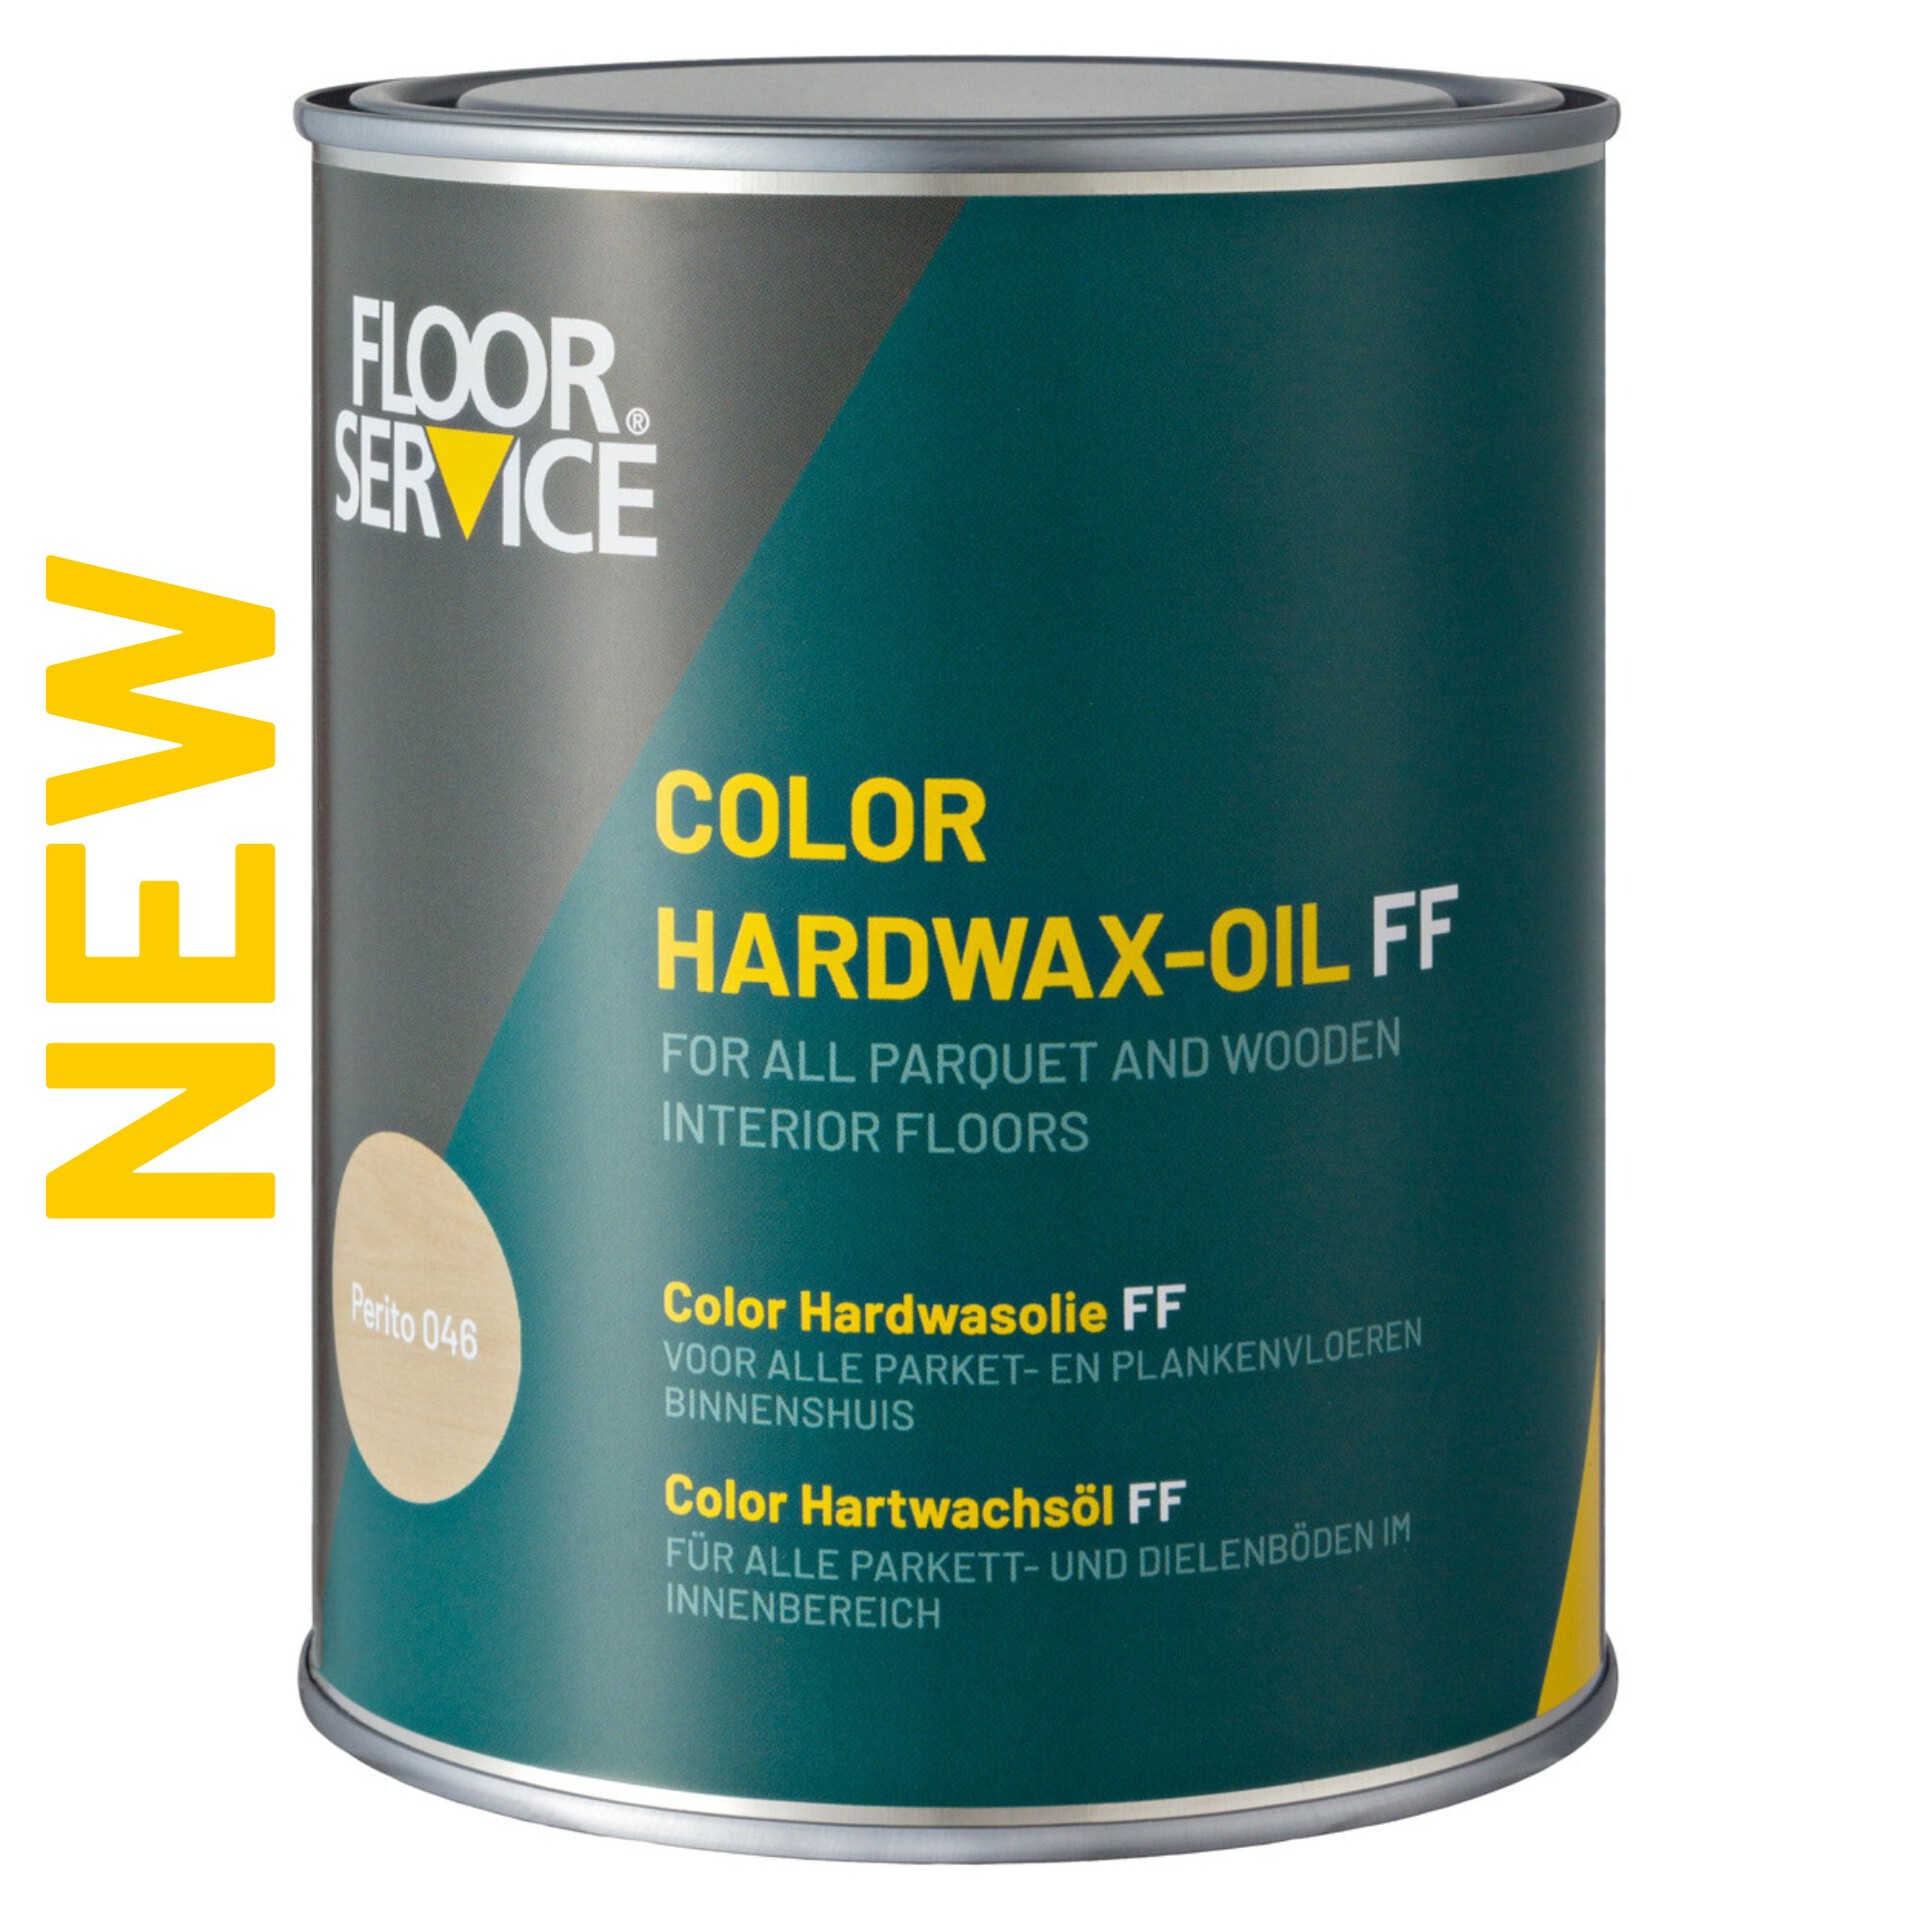 Color Hardwax-oil FF